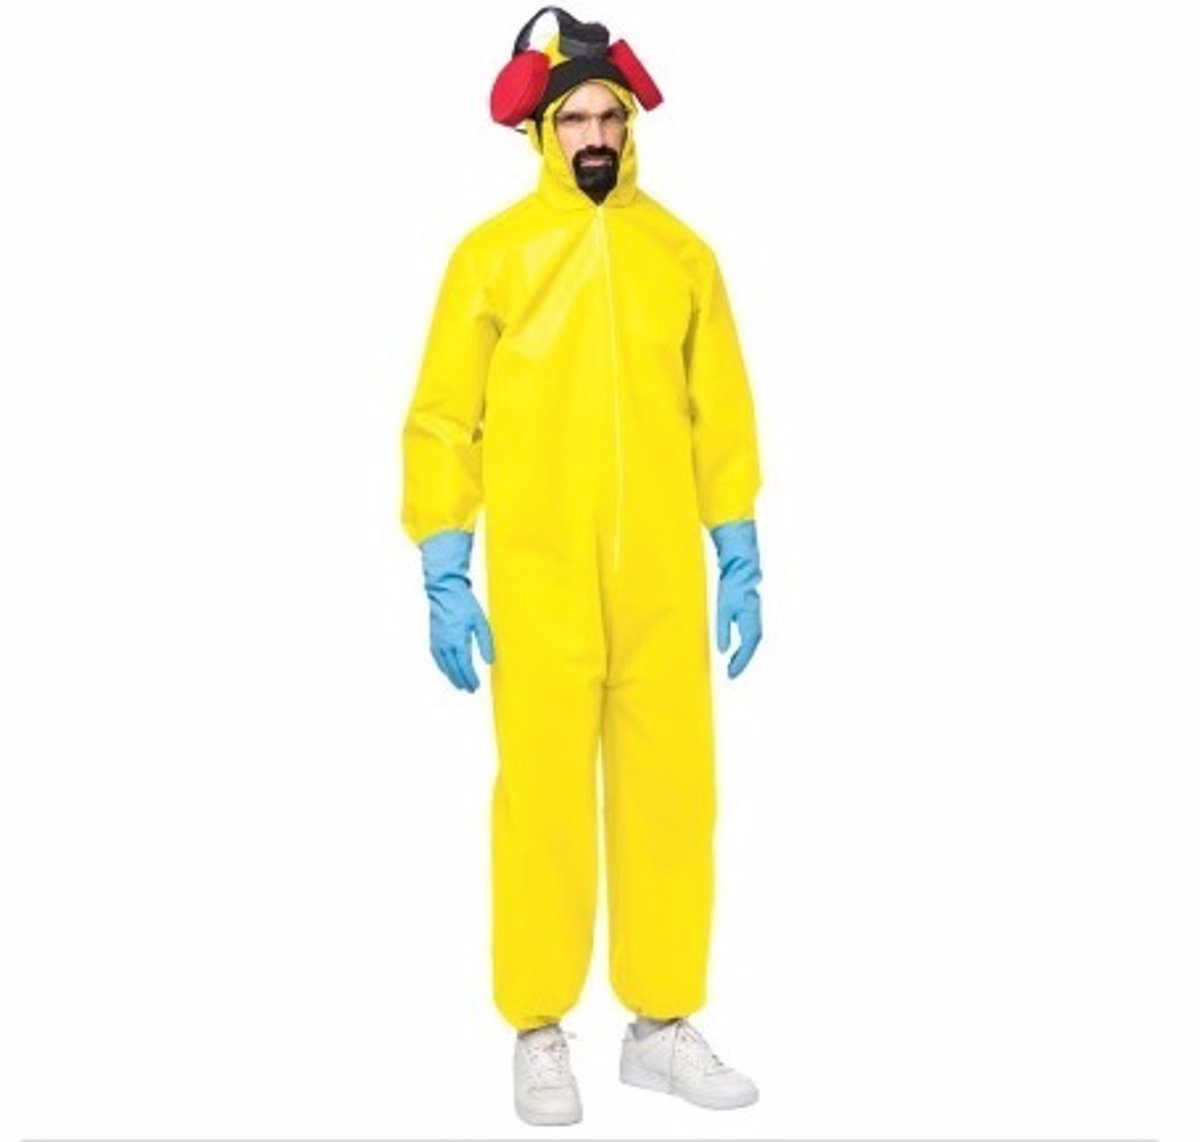 El disfraz Walter White (Breaking Bad) prepara en Halloween